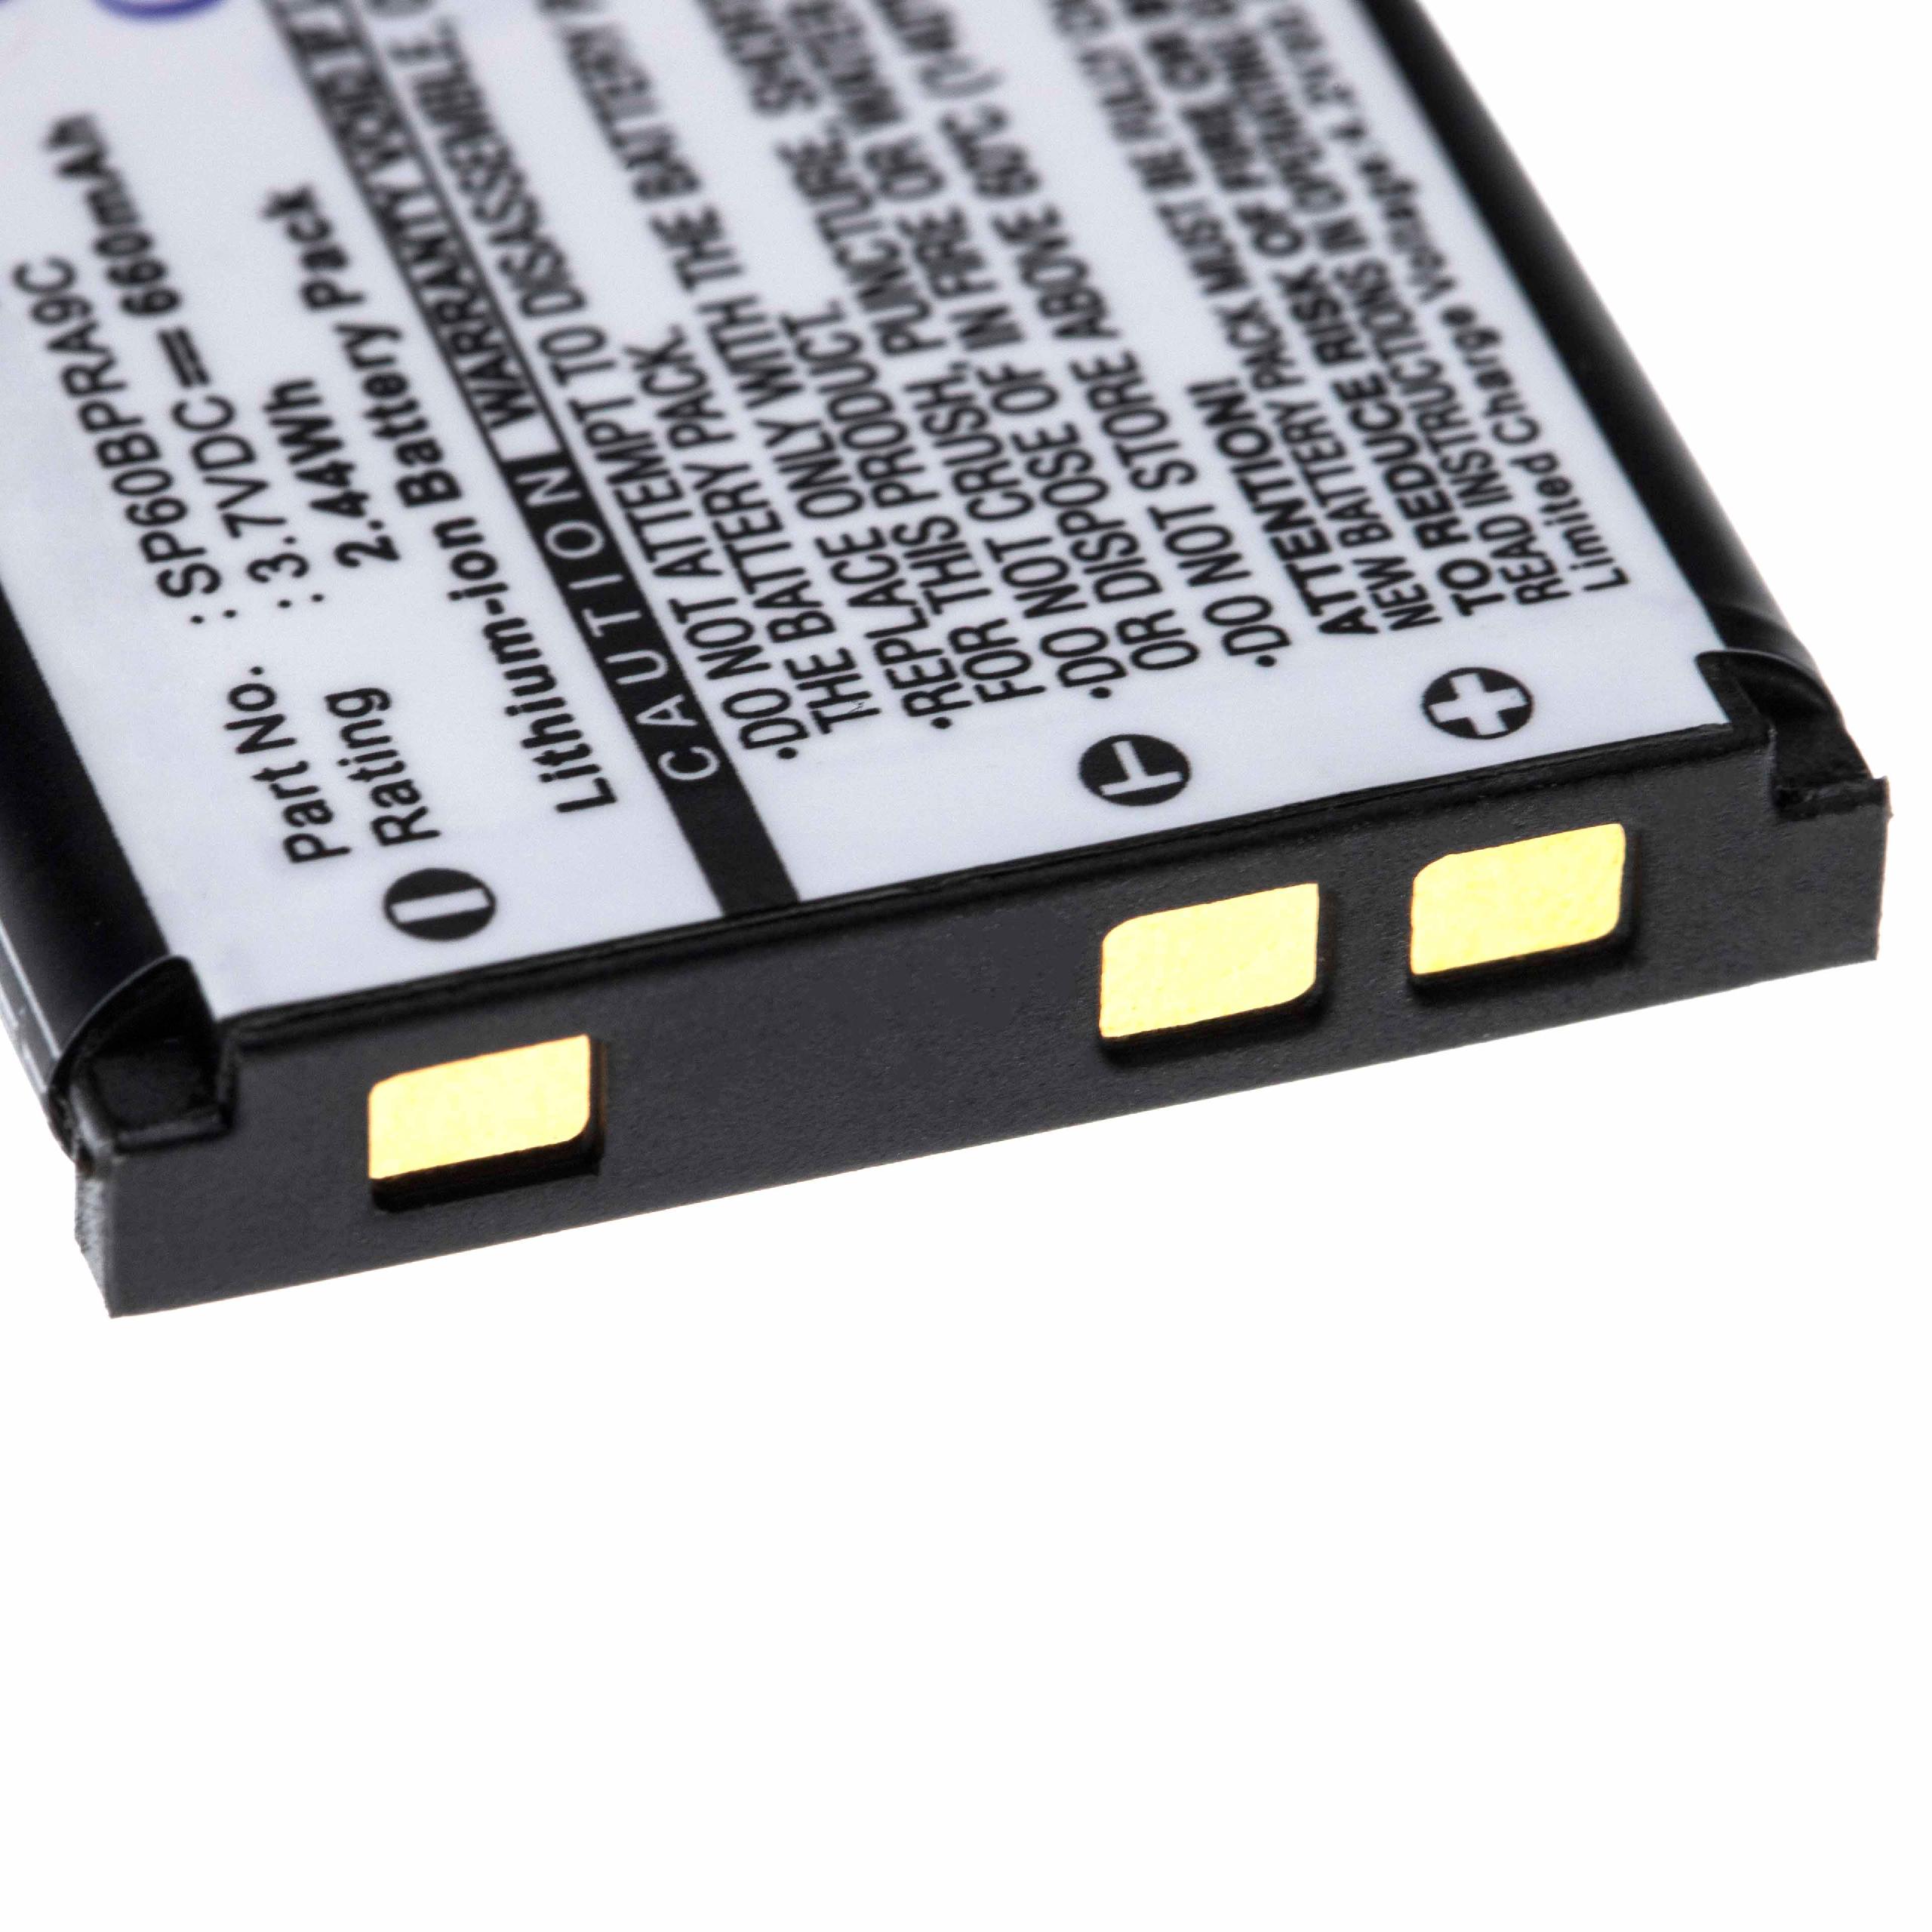 Akumulator bateria do myszki zamiennik Sony SP60, 4-268-590-02, SP60BPRA9C - 660 mAh 3,7 V Li-Ion